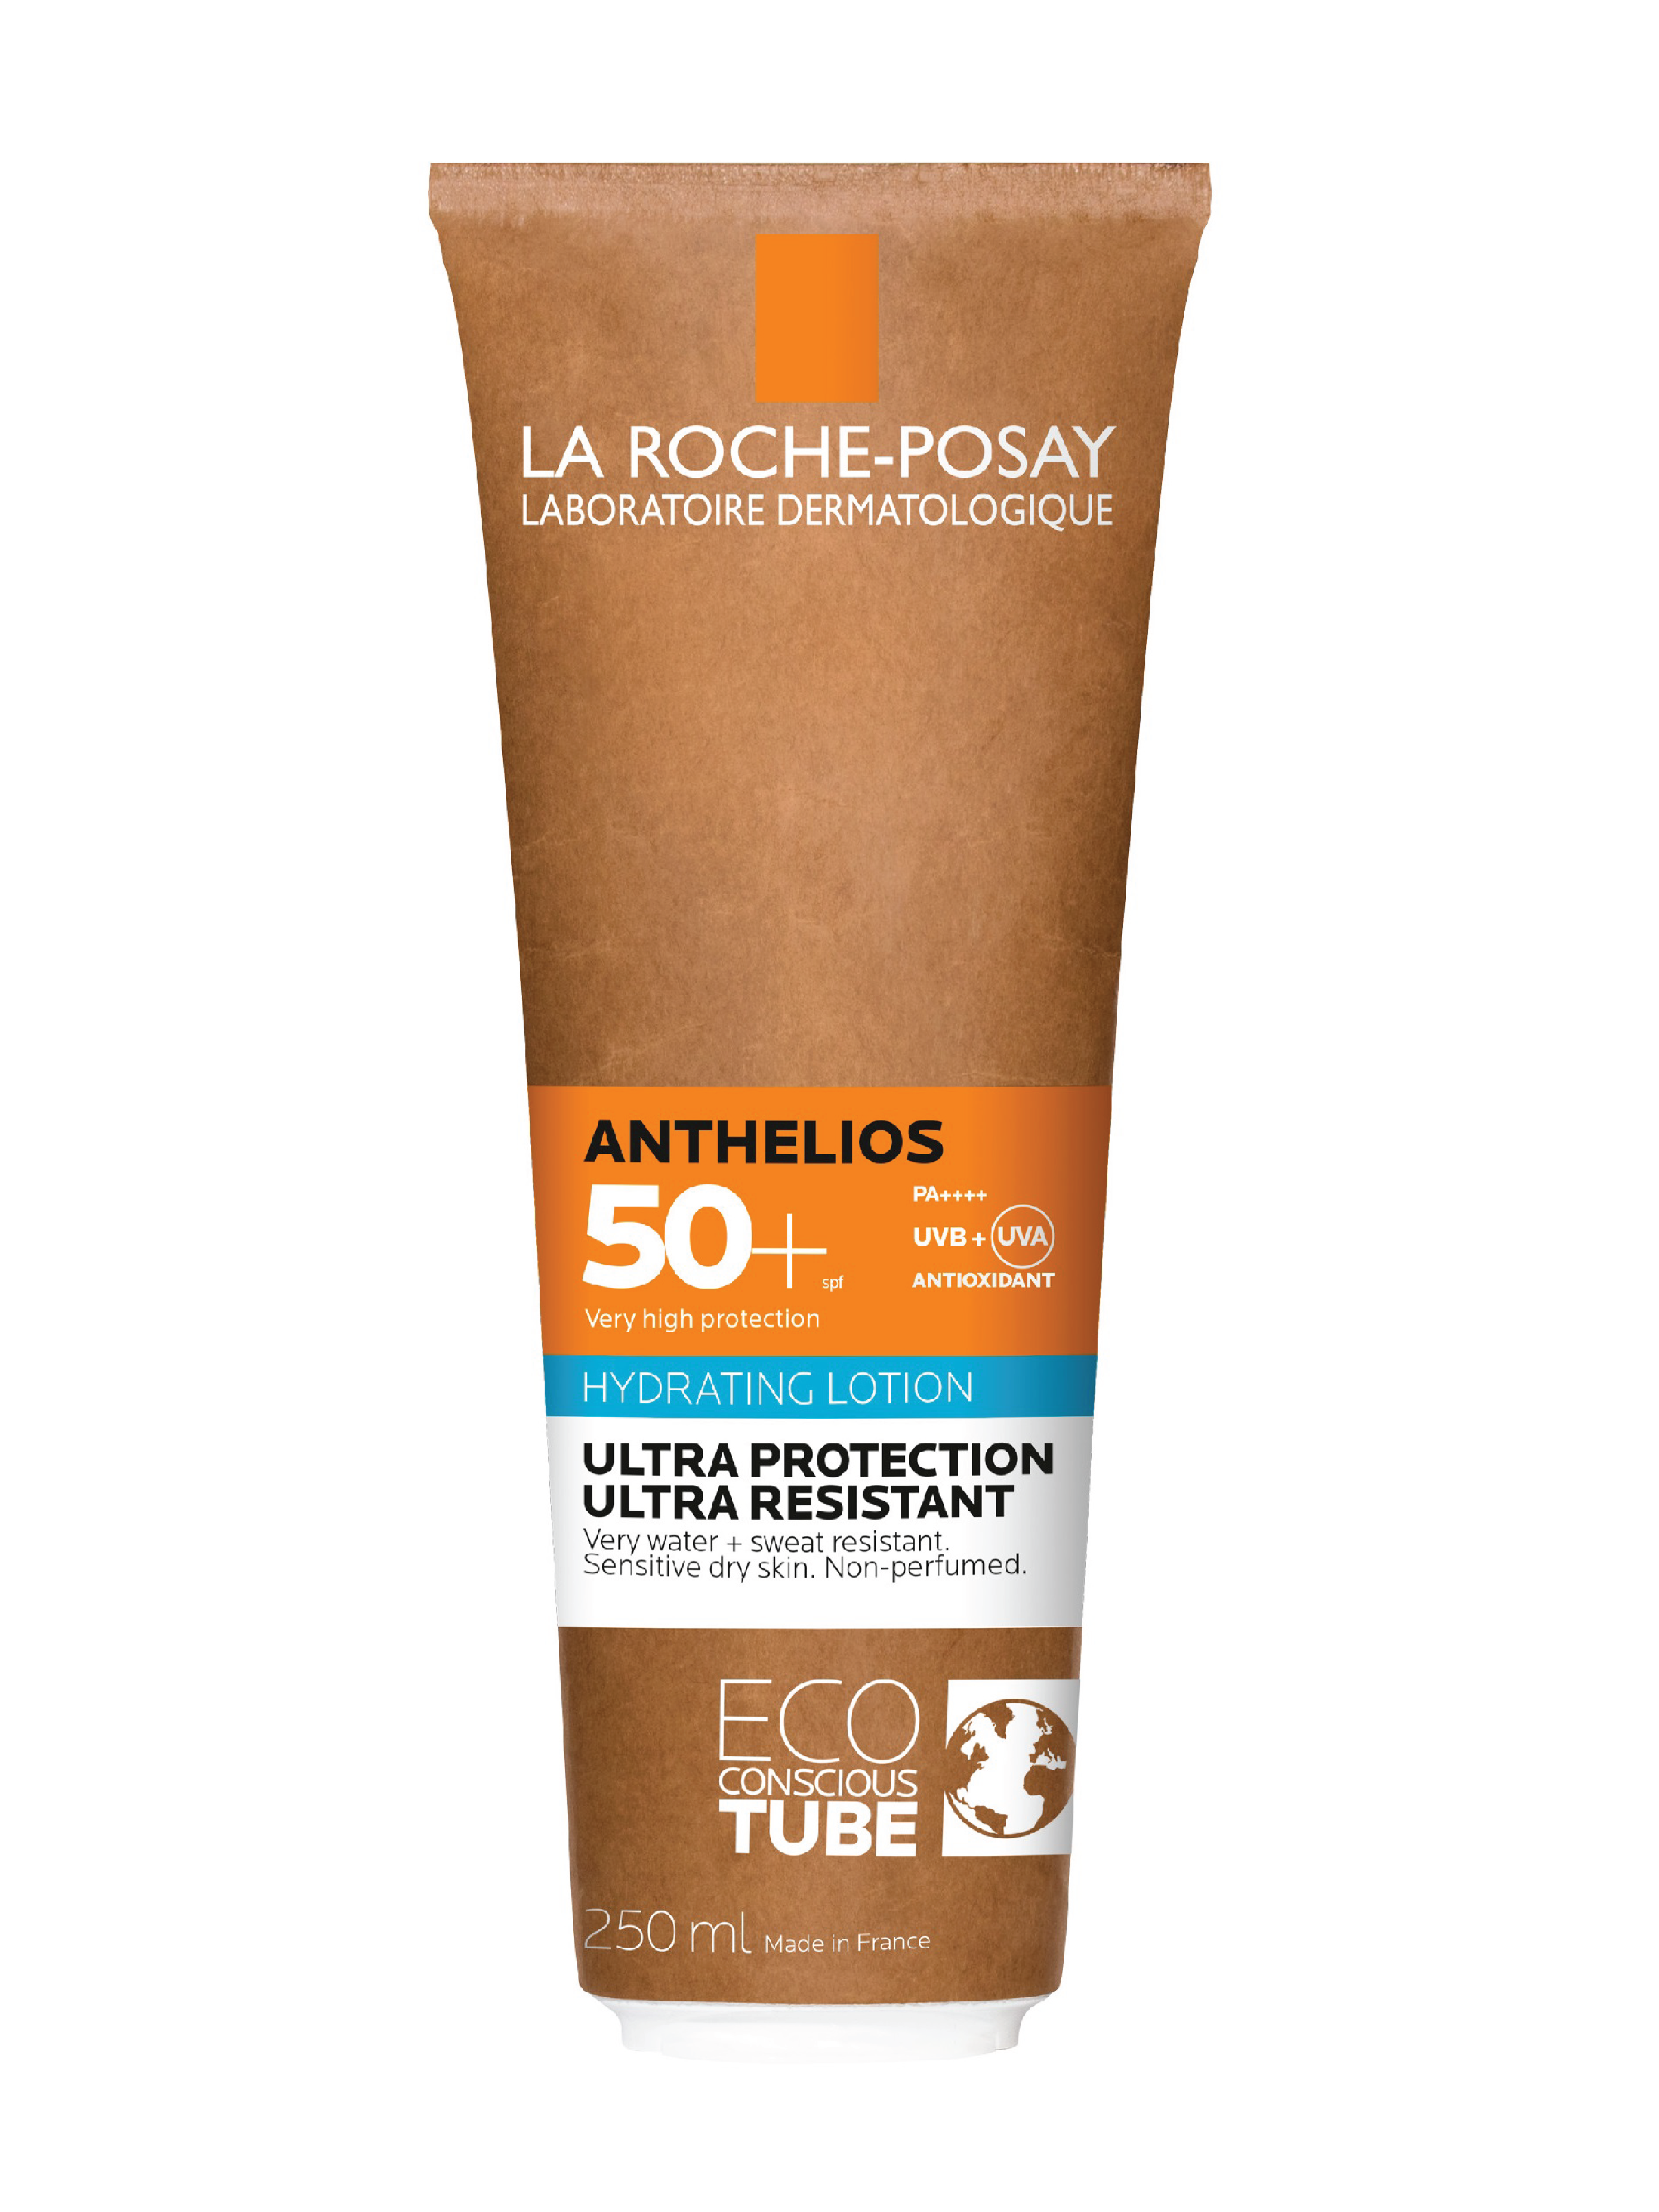 La Roche-Posay Anthelios Lotion SPF50+, 250 ml